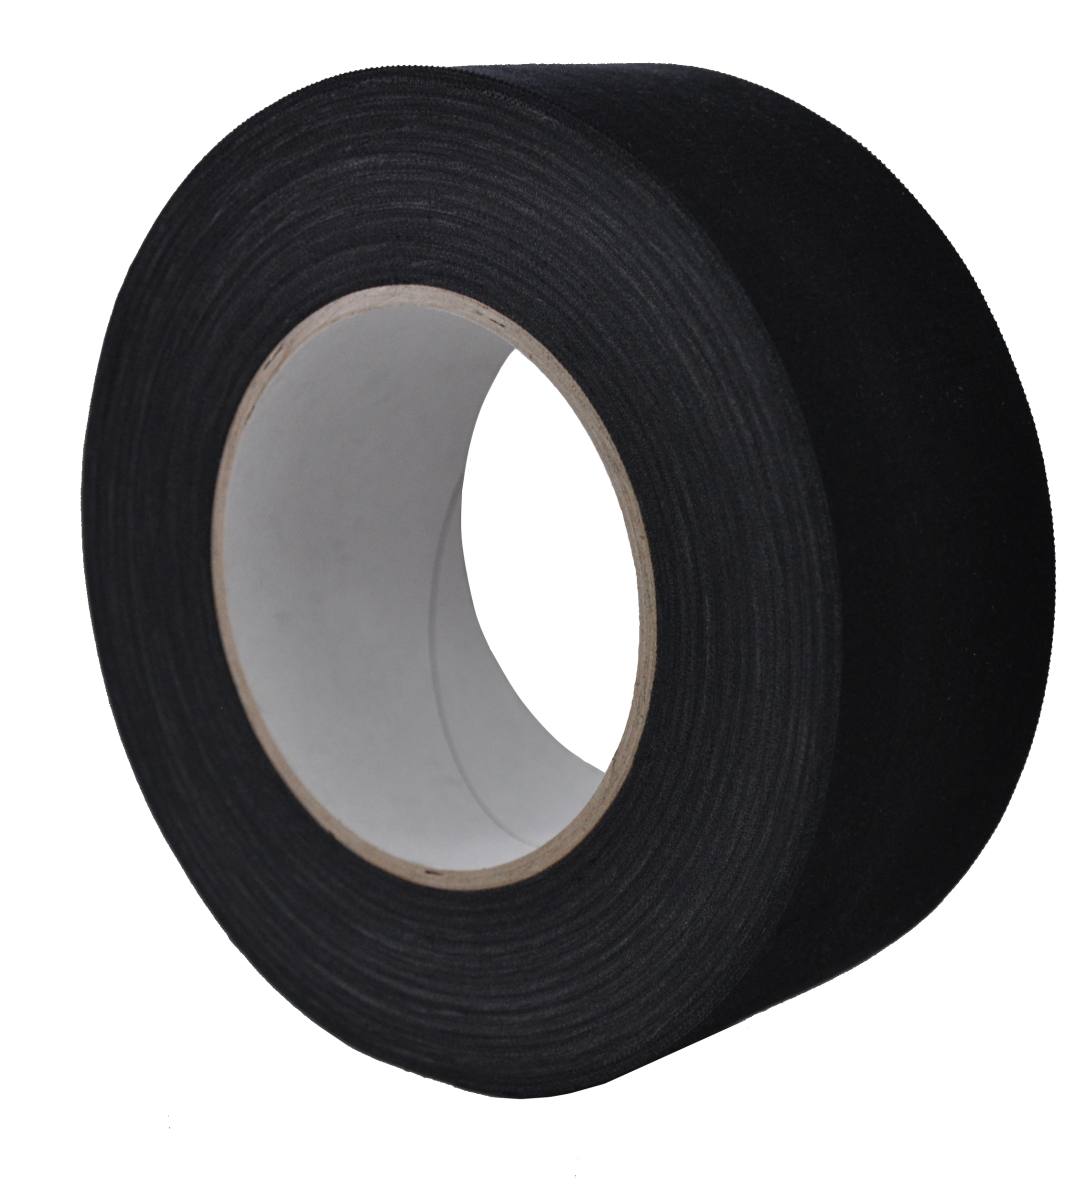 S-K-S 970 Raw fabric adhesive tape, 100 mm x 50 m, black, 0.240 mm